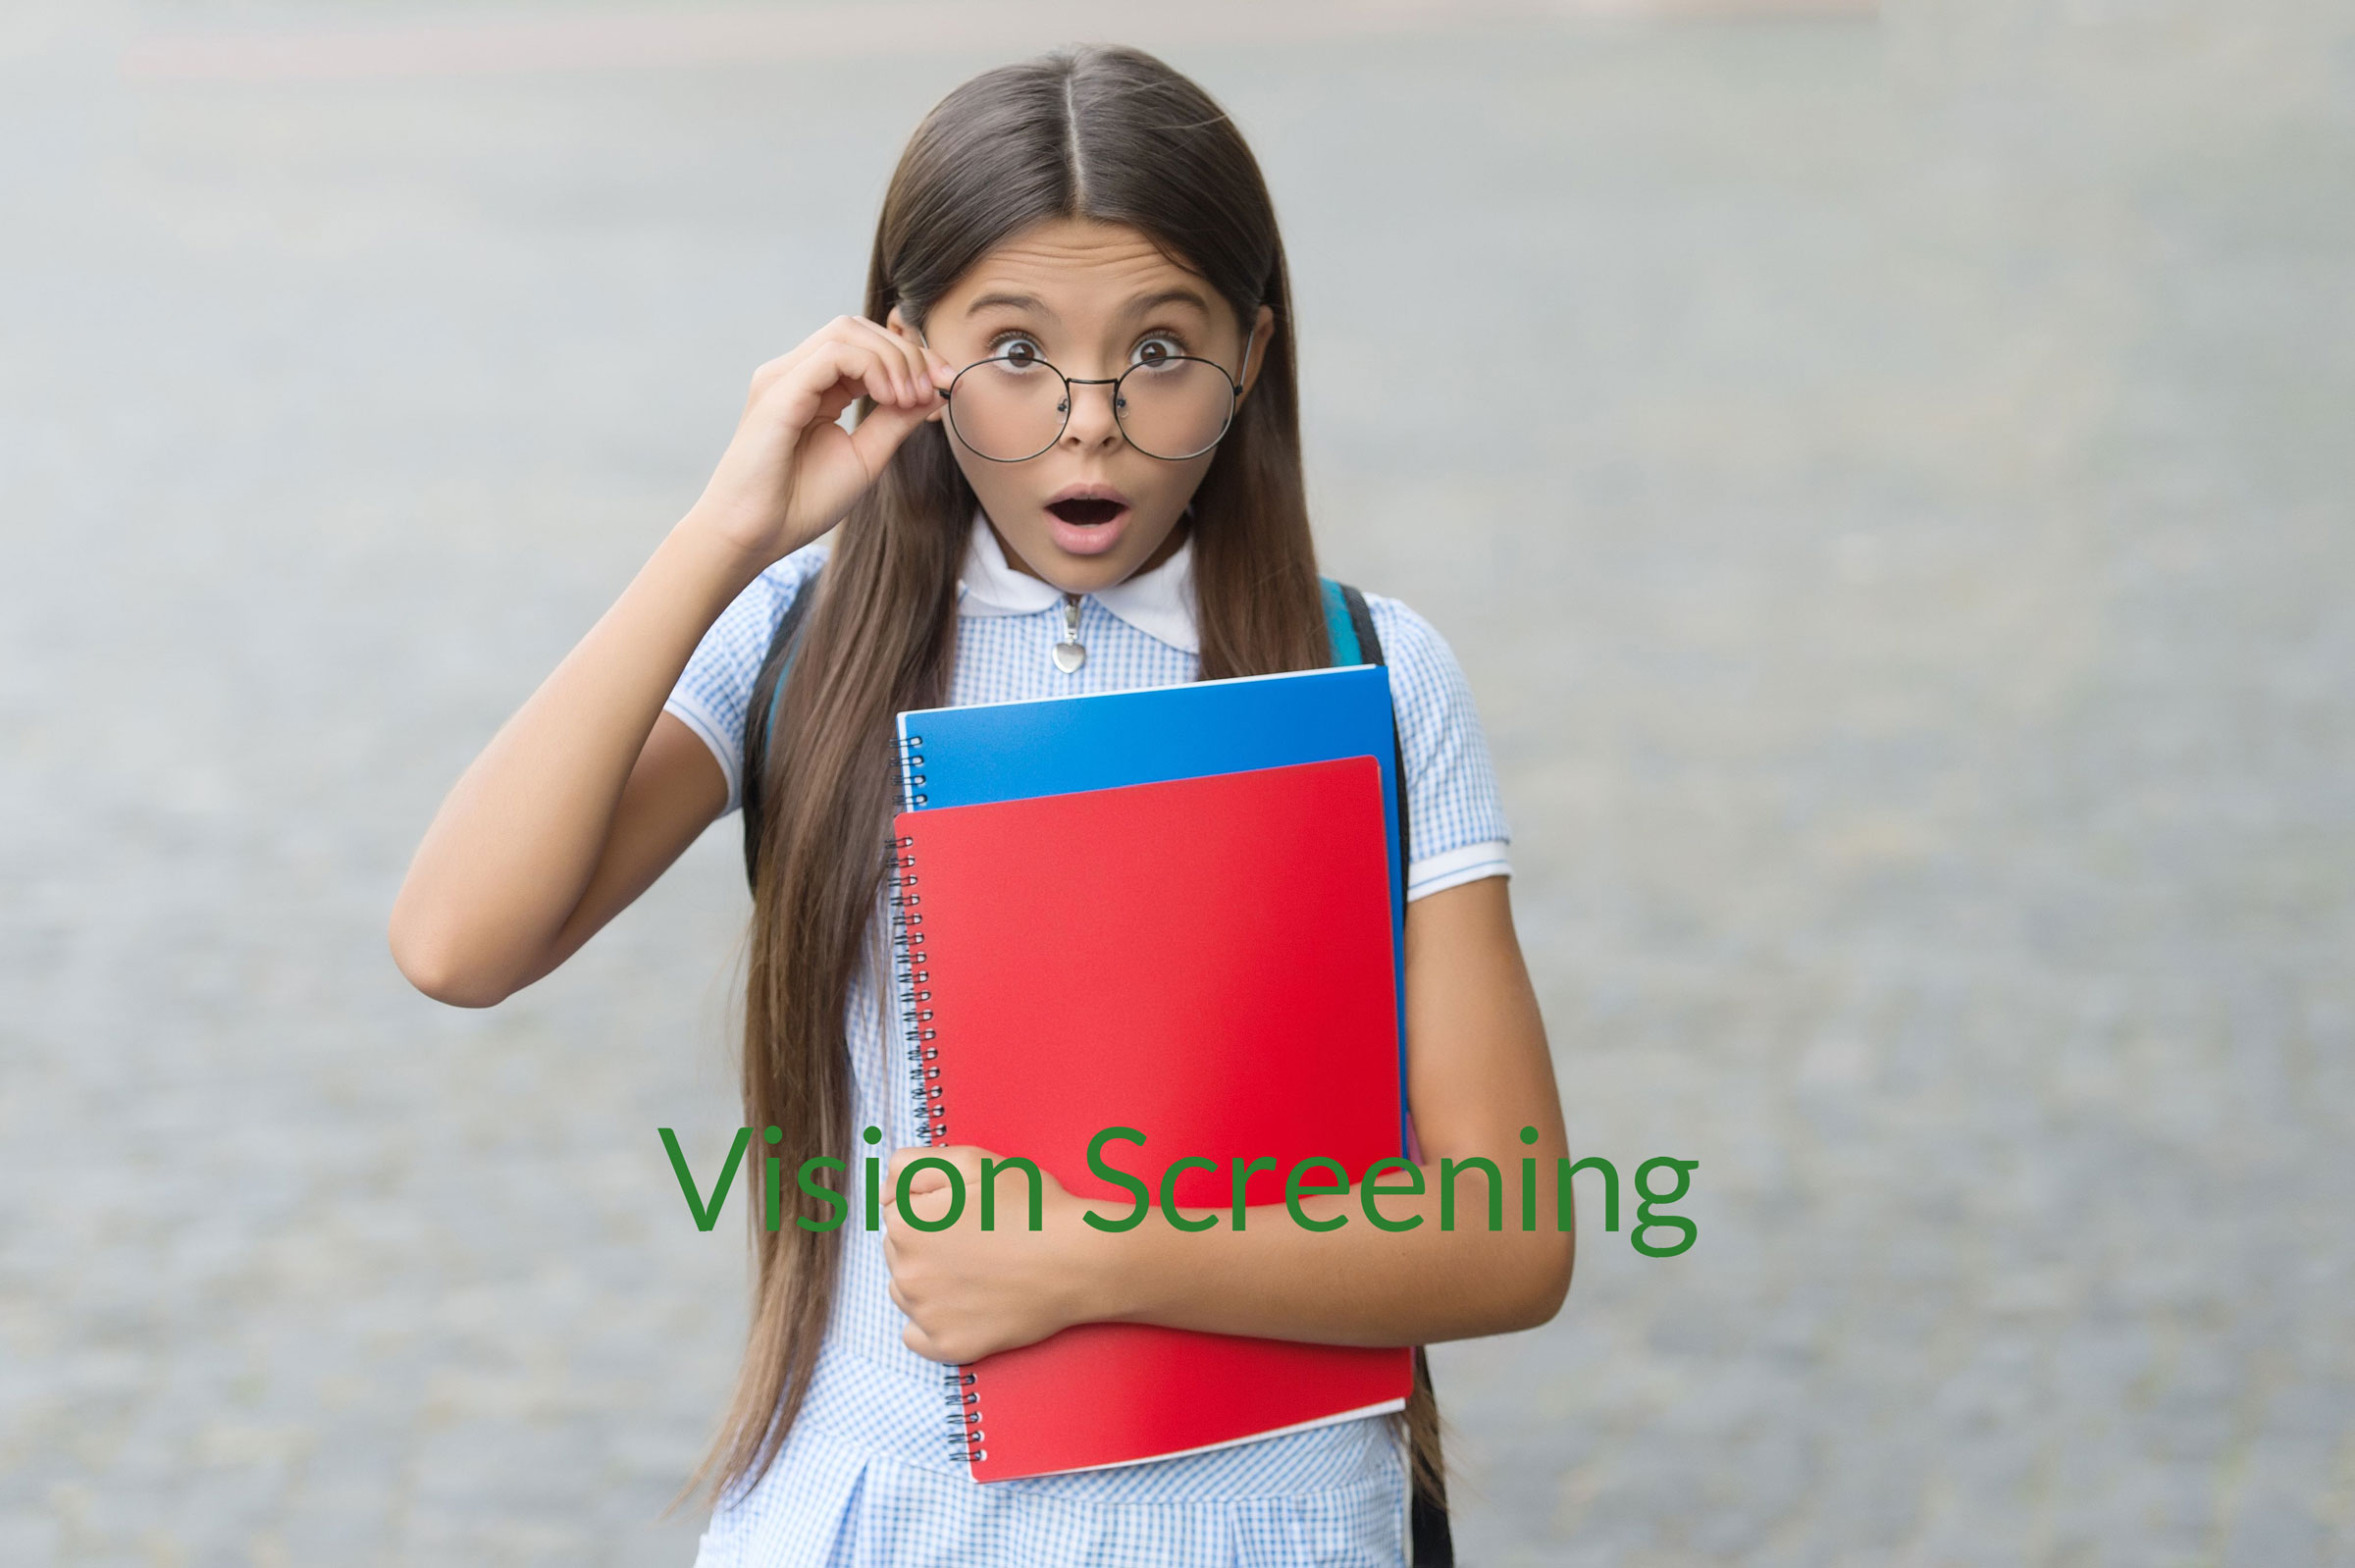 Vision Screening